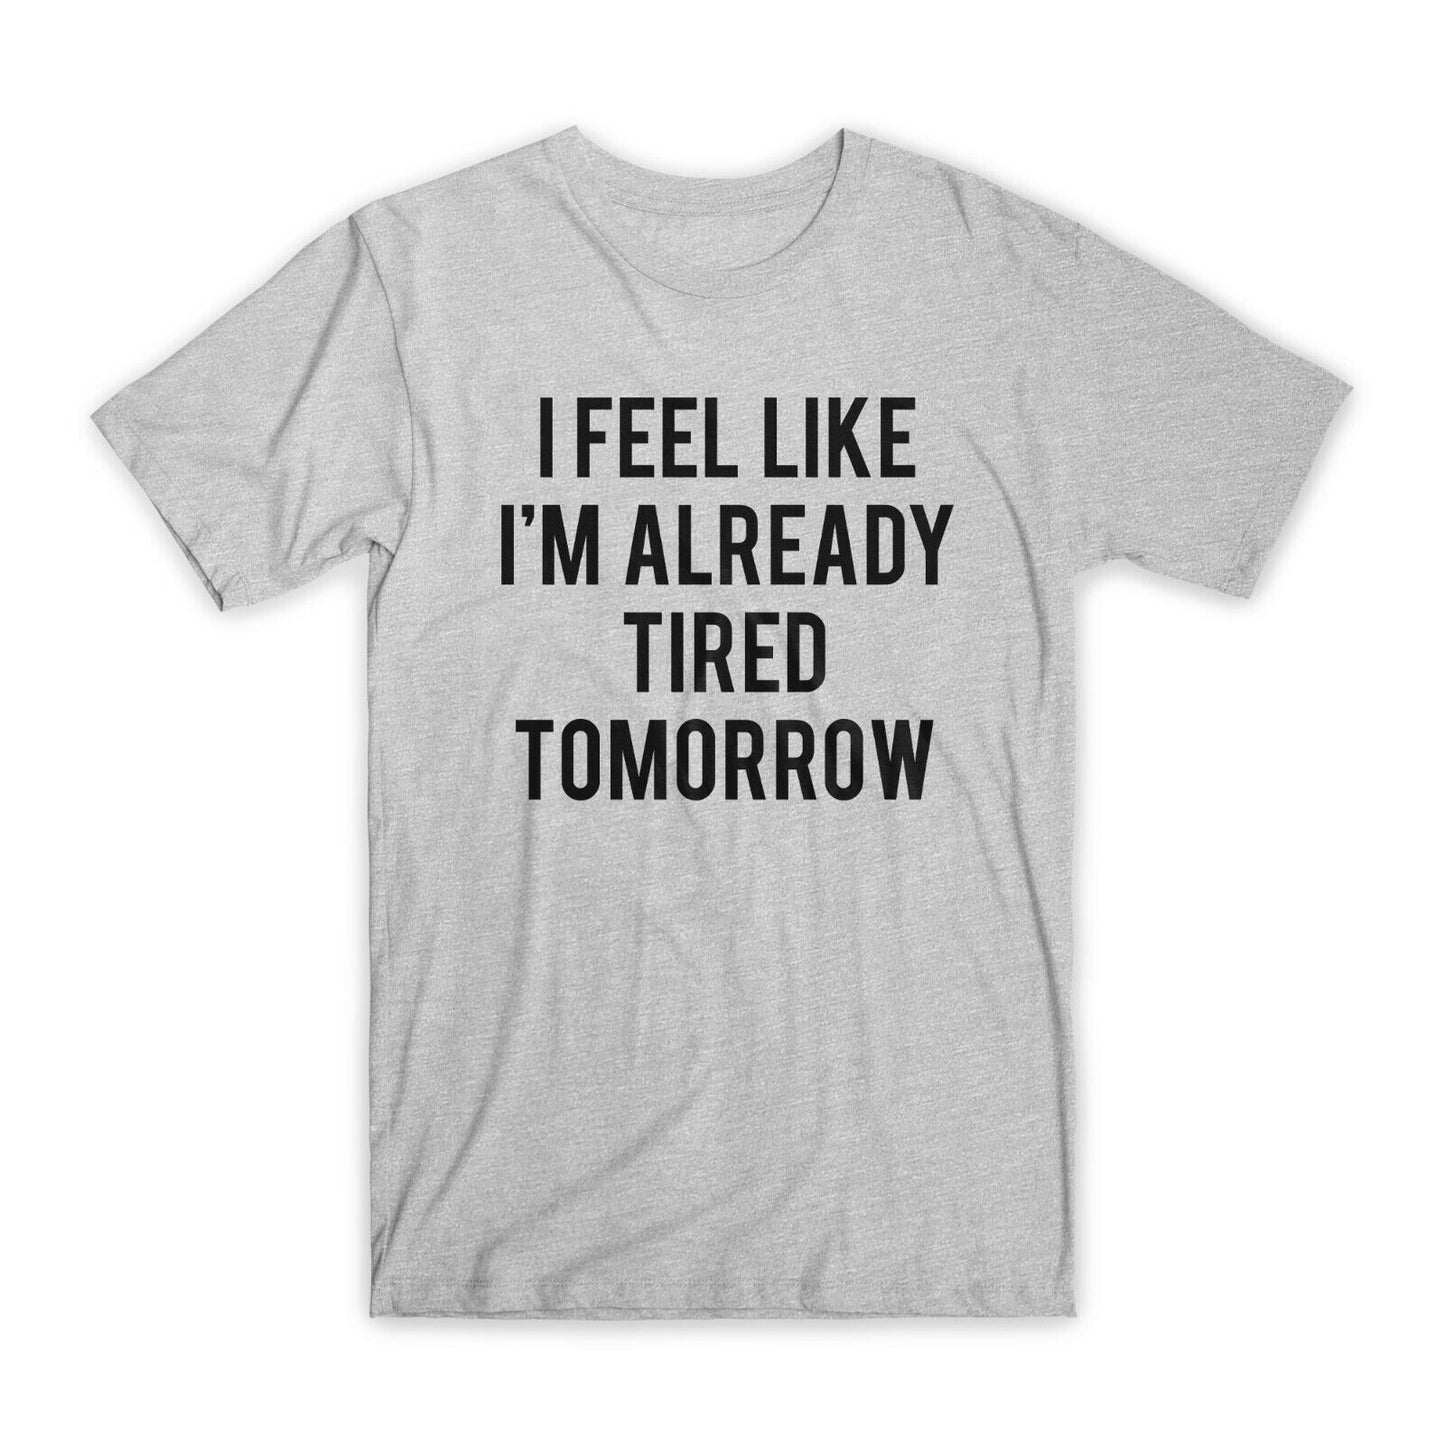 I Feel Like I'm Already Tired Tomorrow T-Shirt Premium Cotton Funny Tee Gift NEW